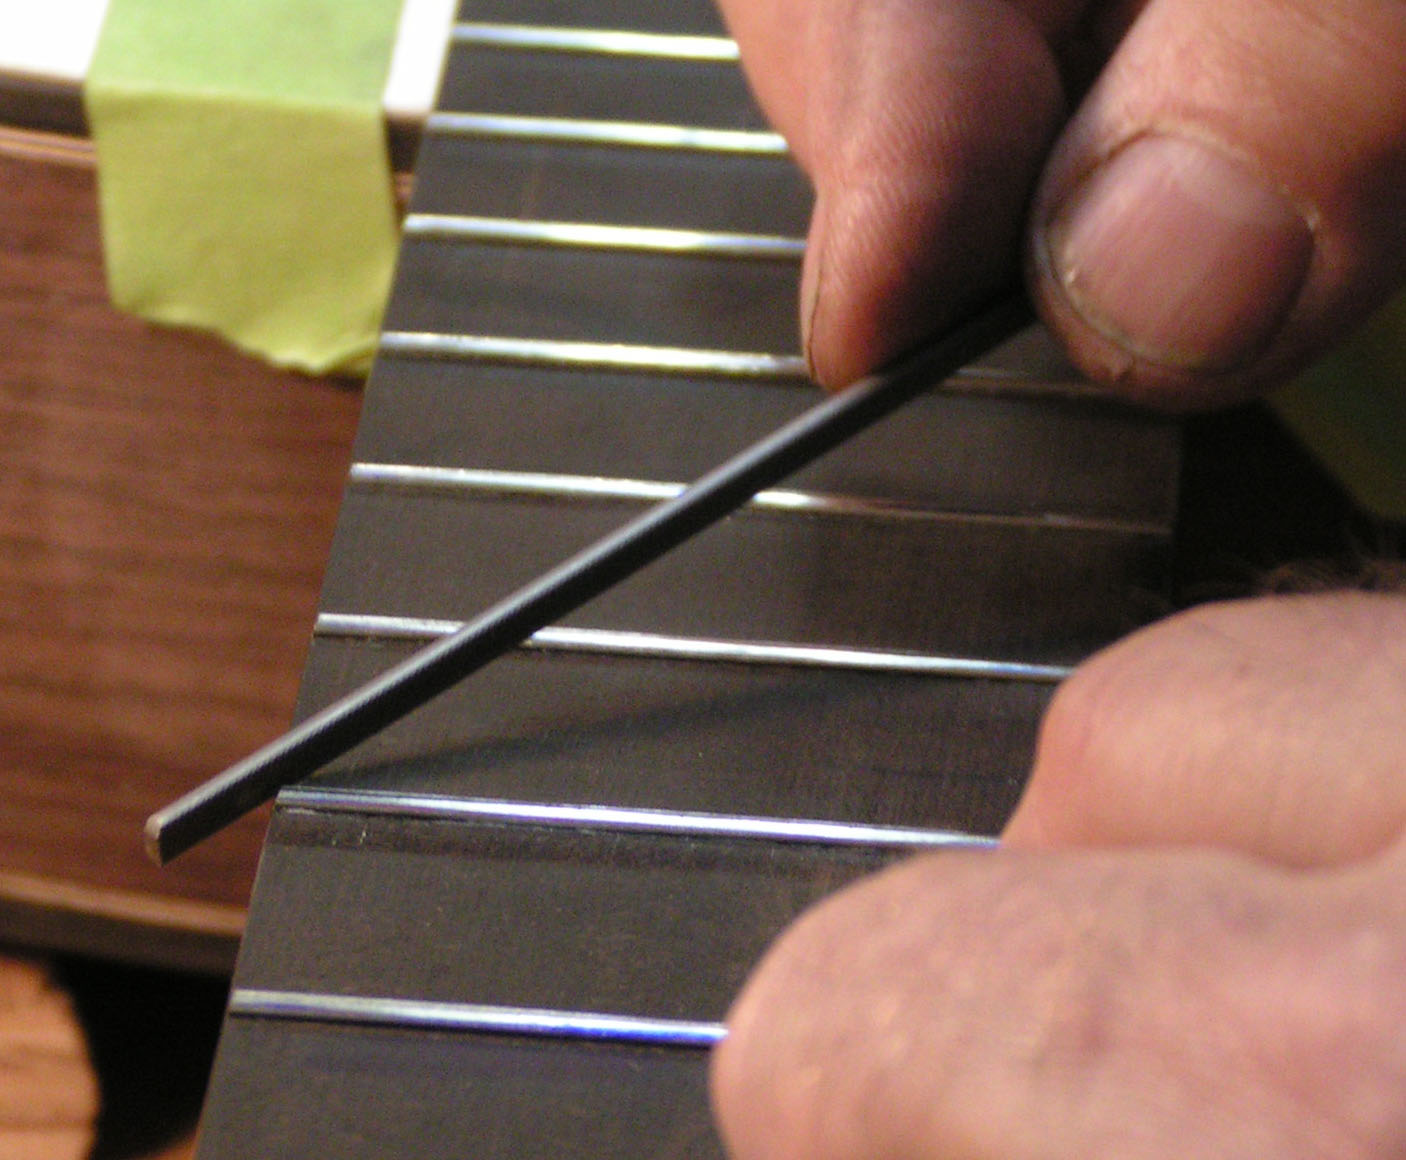 learn guitar setup maintenance basic repair